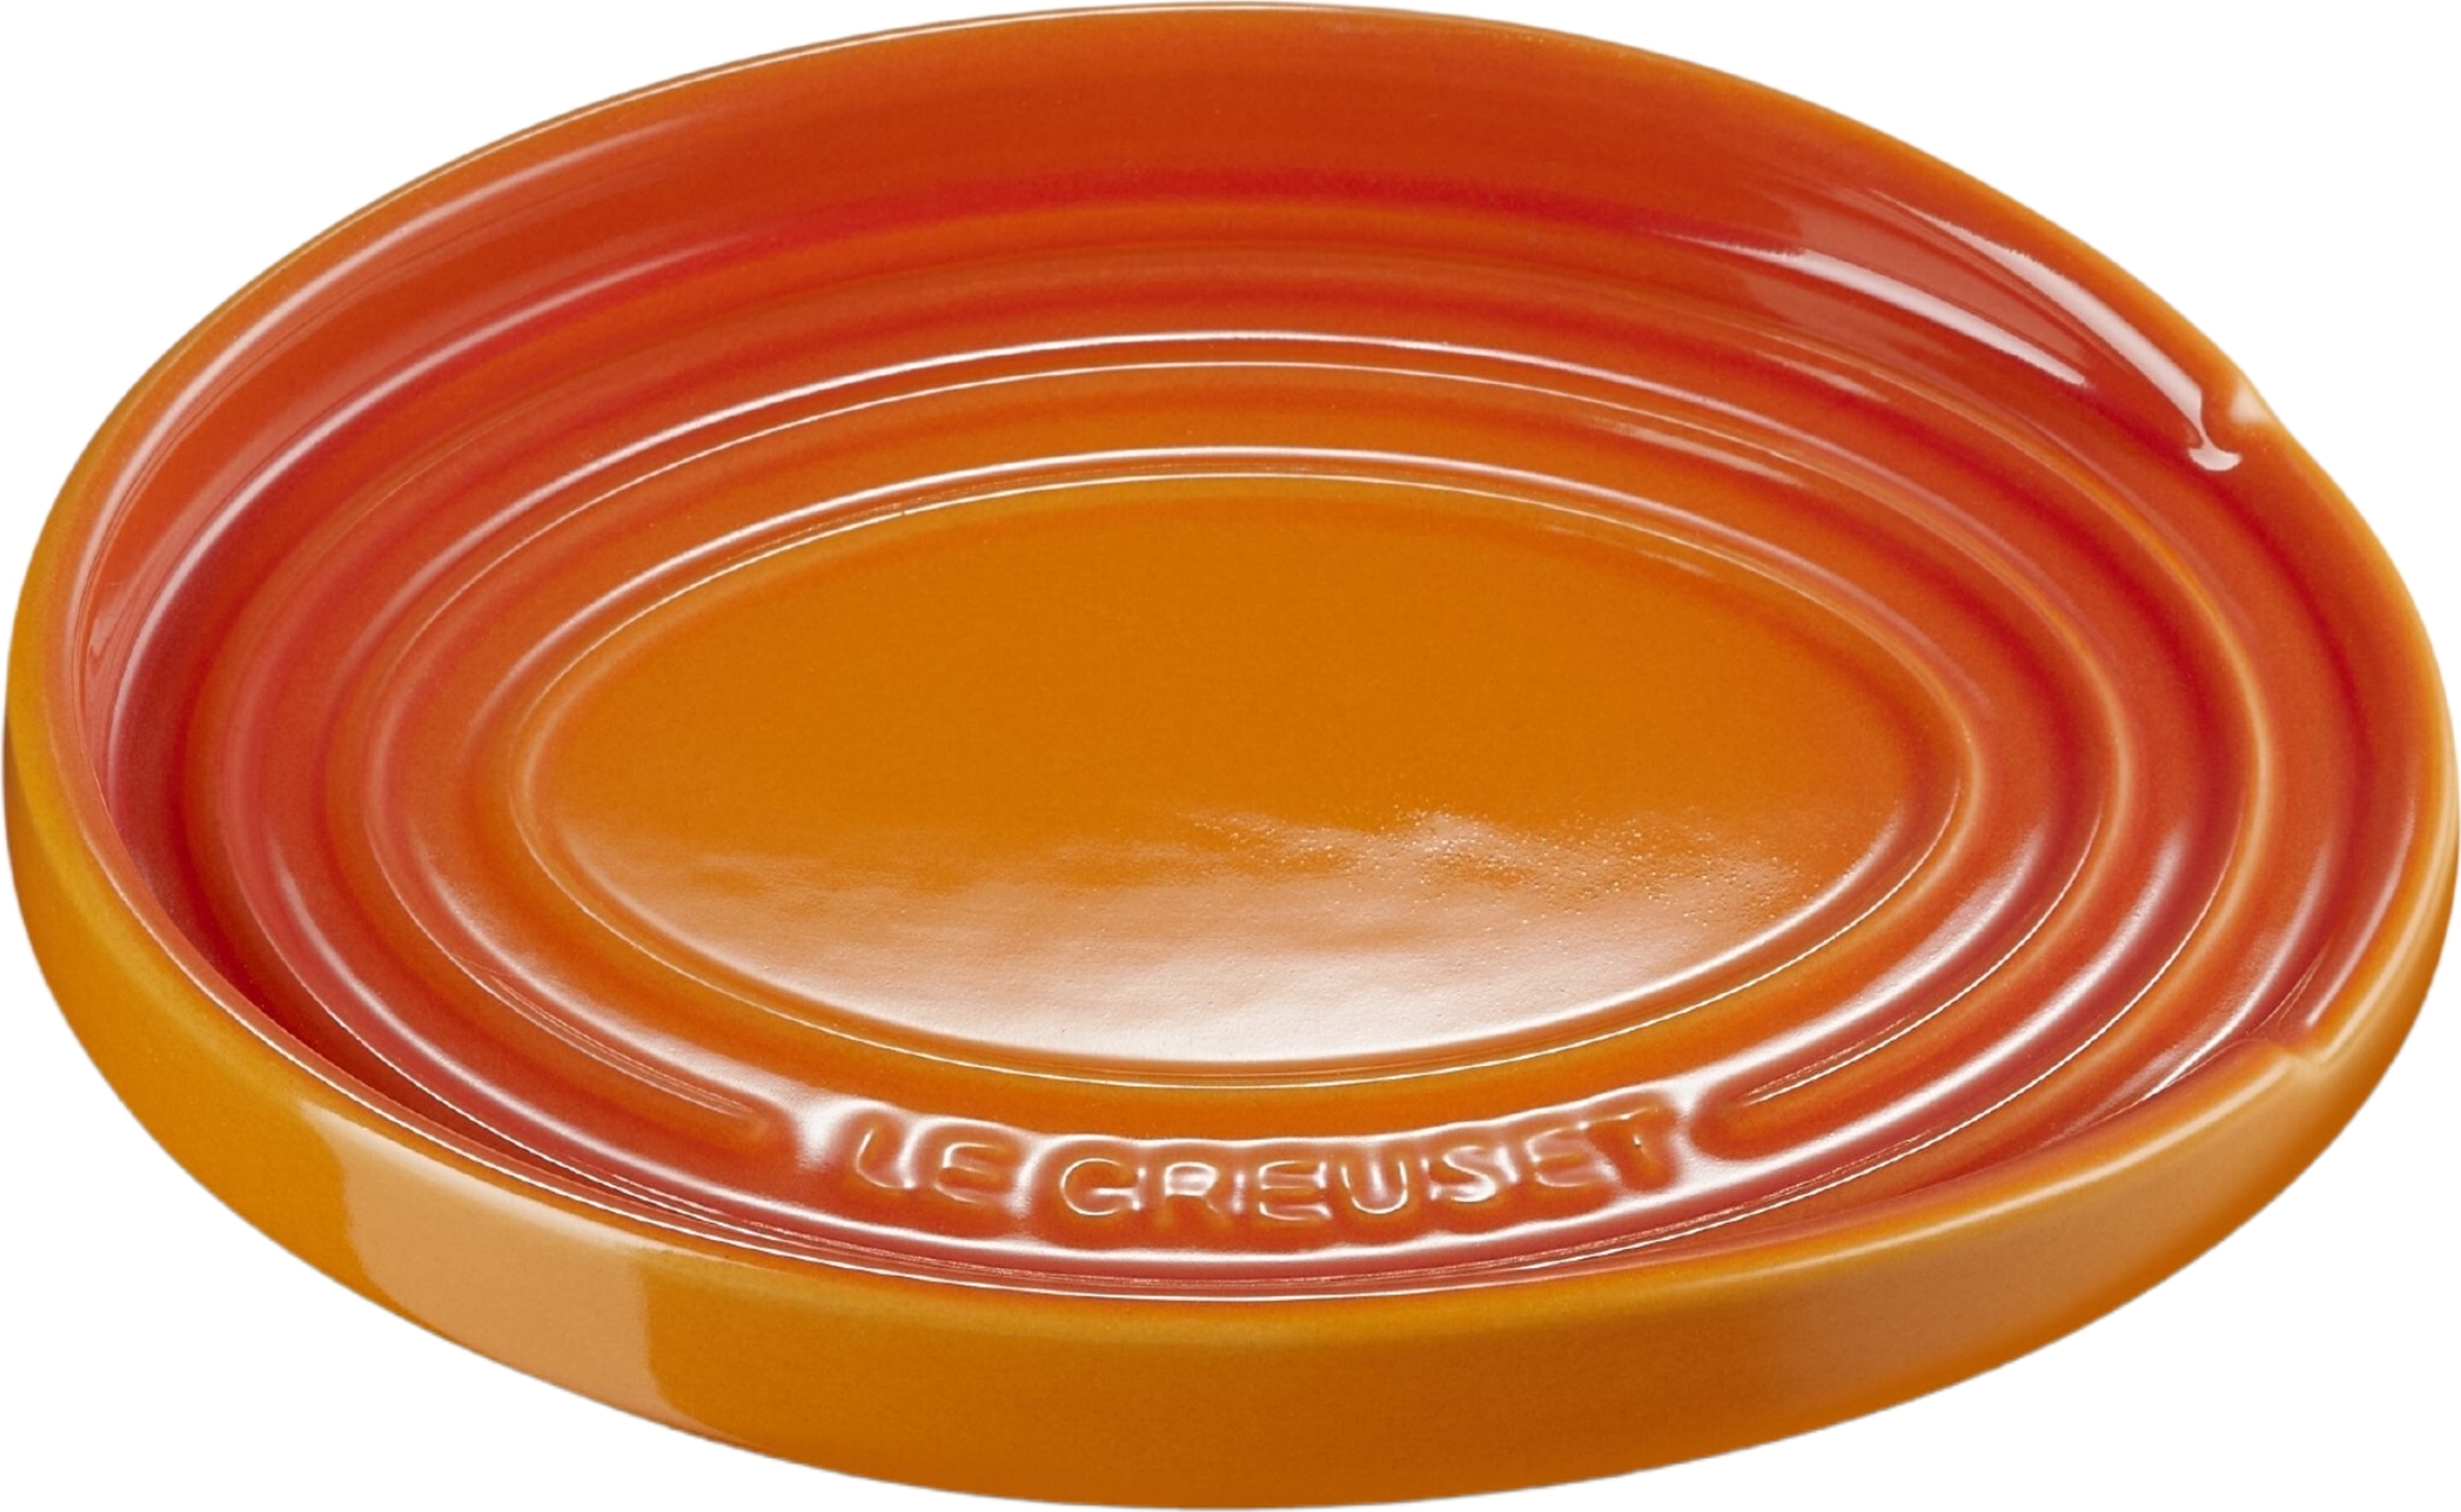 Pet Dog Bowl Le Creuset Orange Medium (4 Cups)